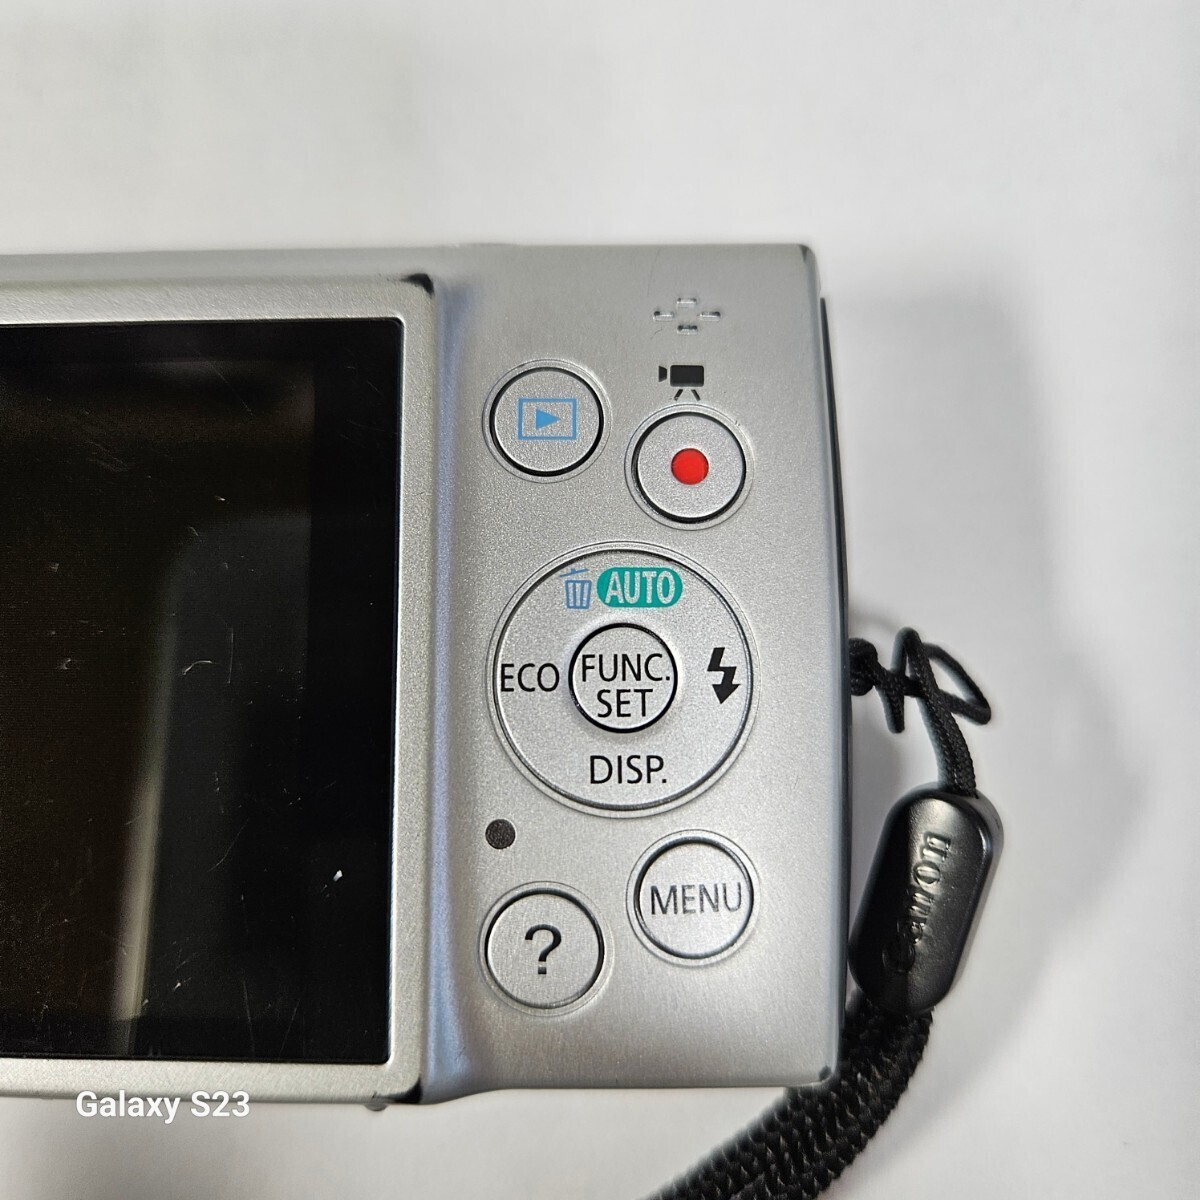 * Canon i comb -Canon IXY 140 compact digital camera silver body, accessory attaching # electrification has confirmed 